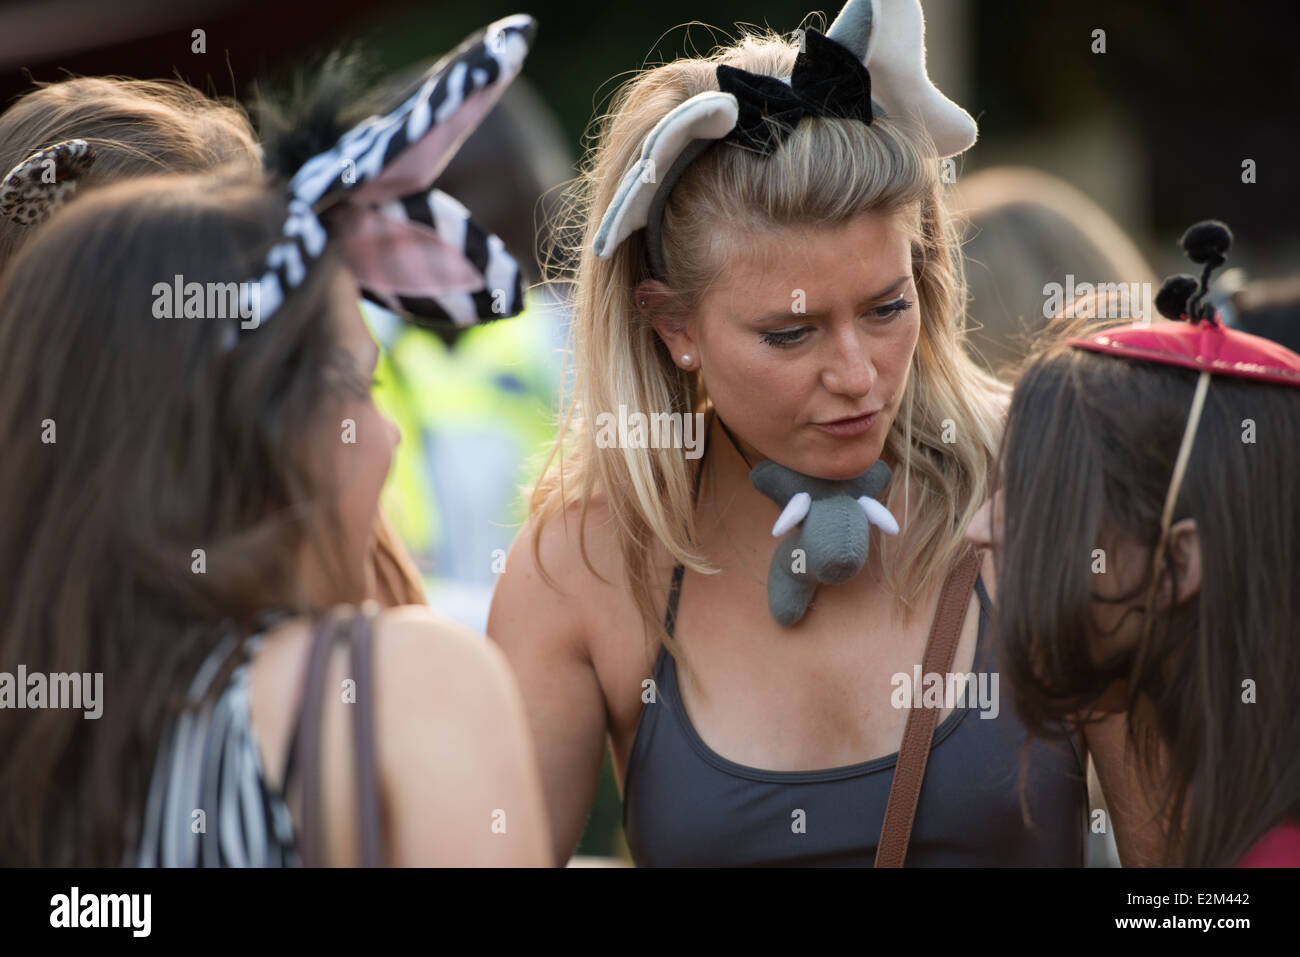 London Zoo June 2014 evening event. Women wearing animal headbands and hats. Stock Photo